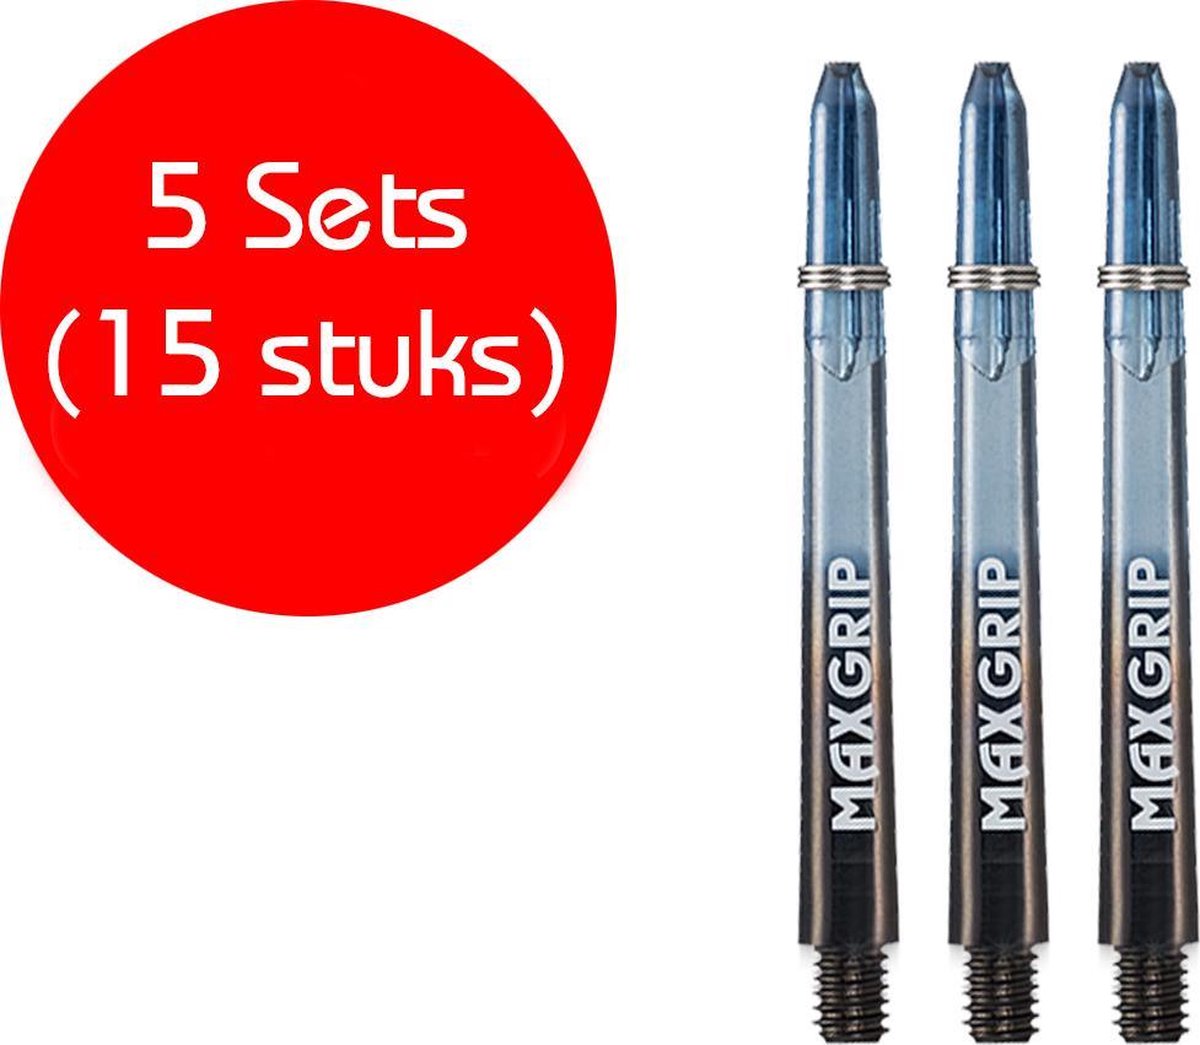 Dragon darts - Maxgrip - 5 sets (15 stuks) - dart shafts - zwart-blauw - darts shafts - medium